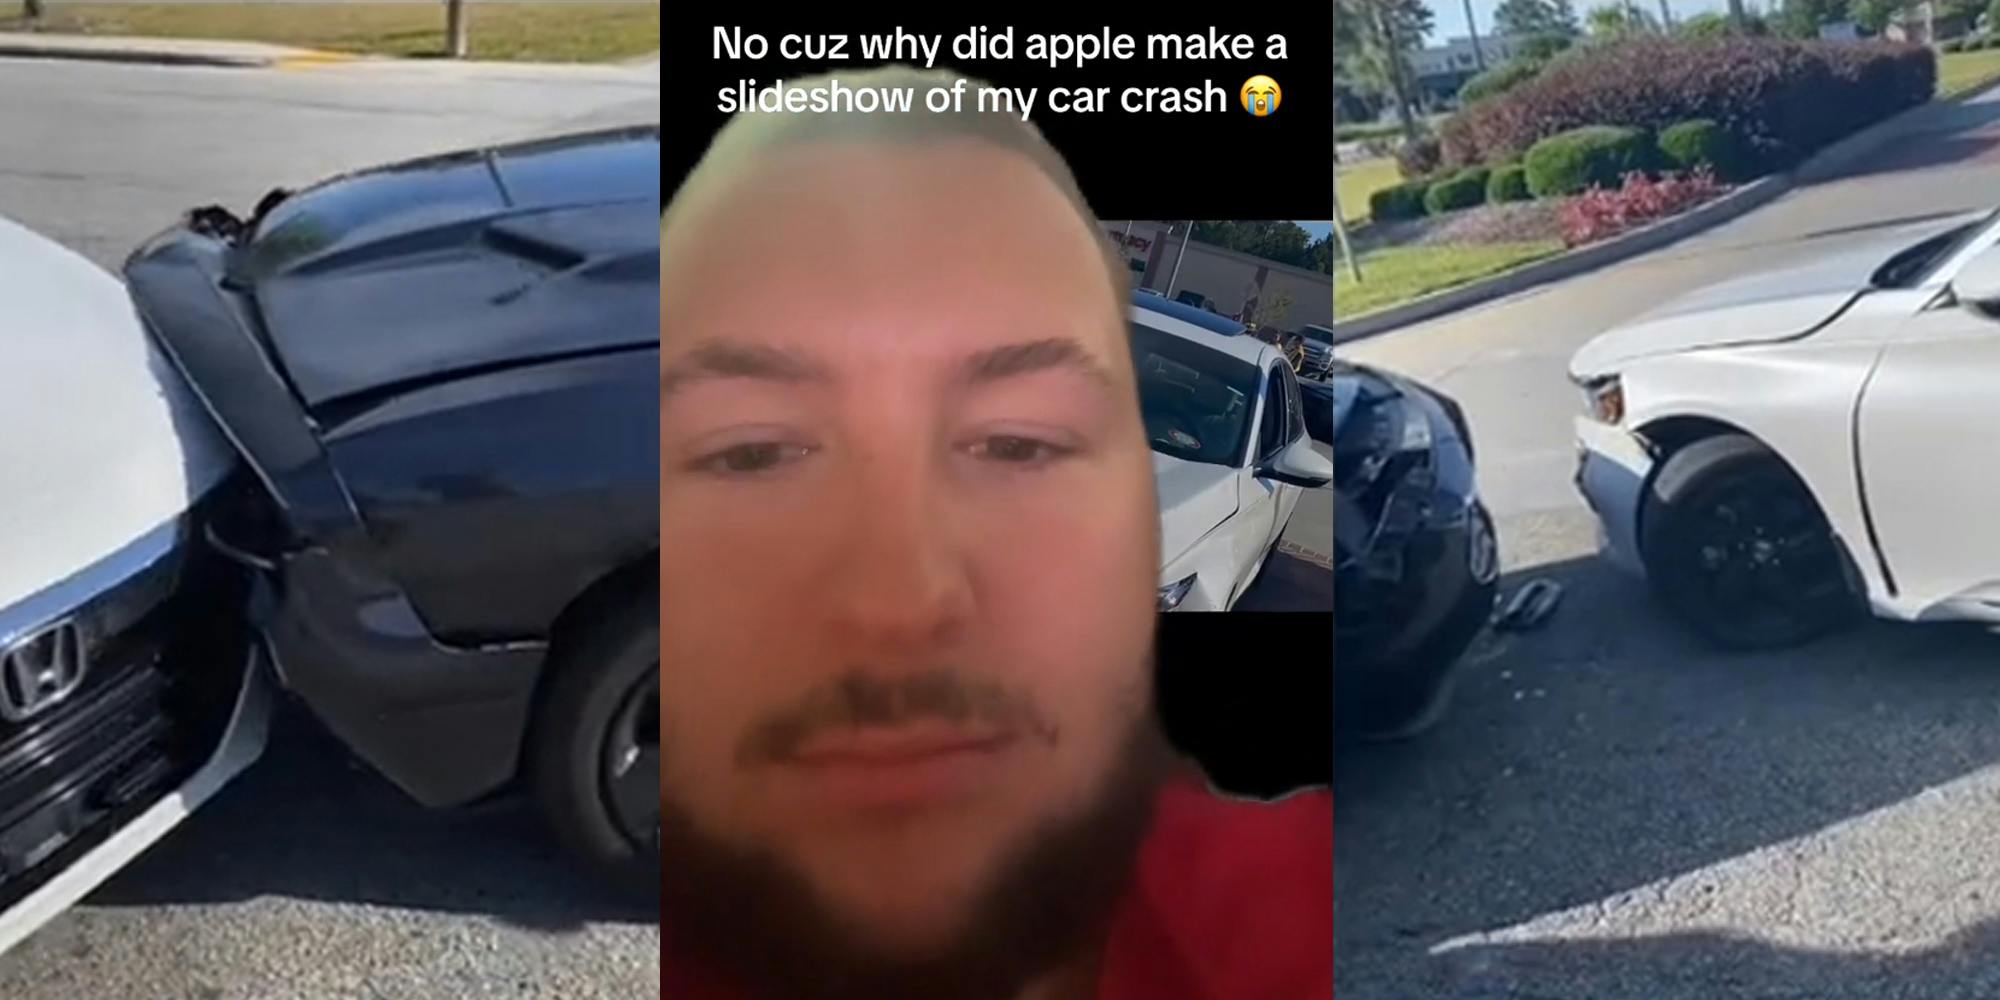 car crash photo (l) man greenscreen TikTok over Apple slideshow of car crash with caption "No cuz why did apple make a slideshow of my car crash" (c) car crash photo (r)